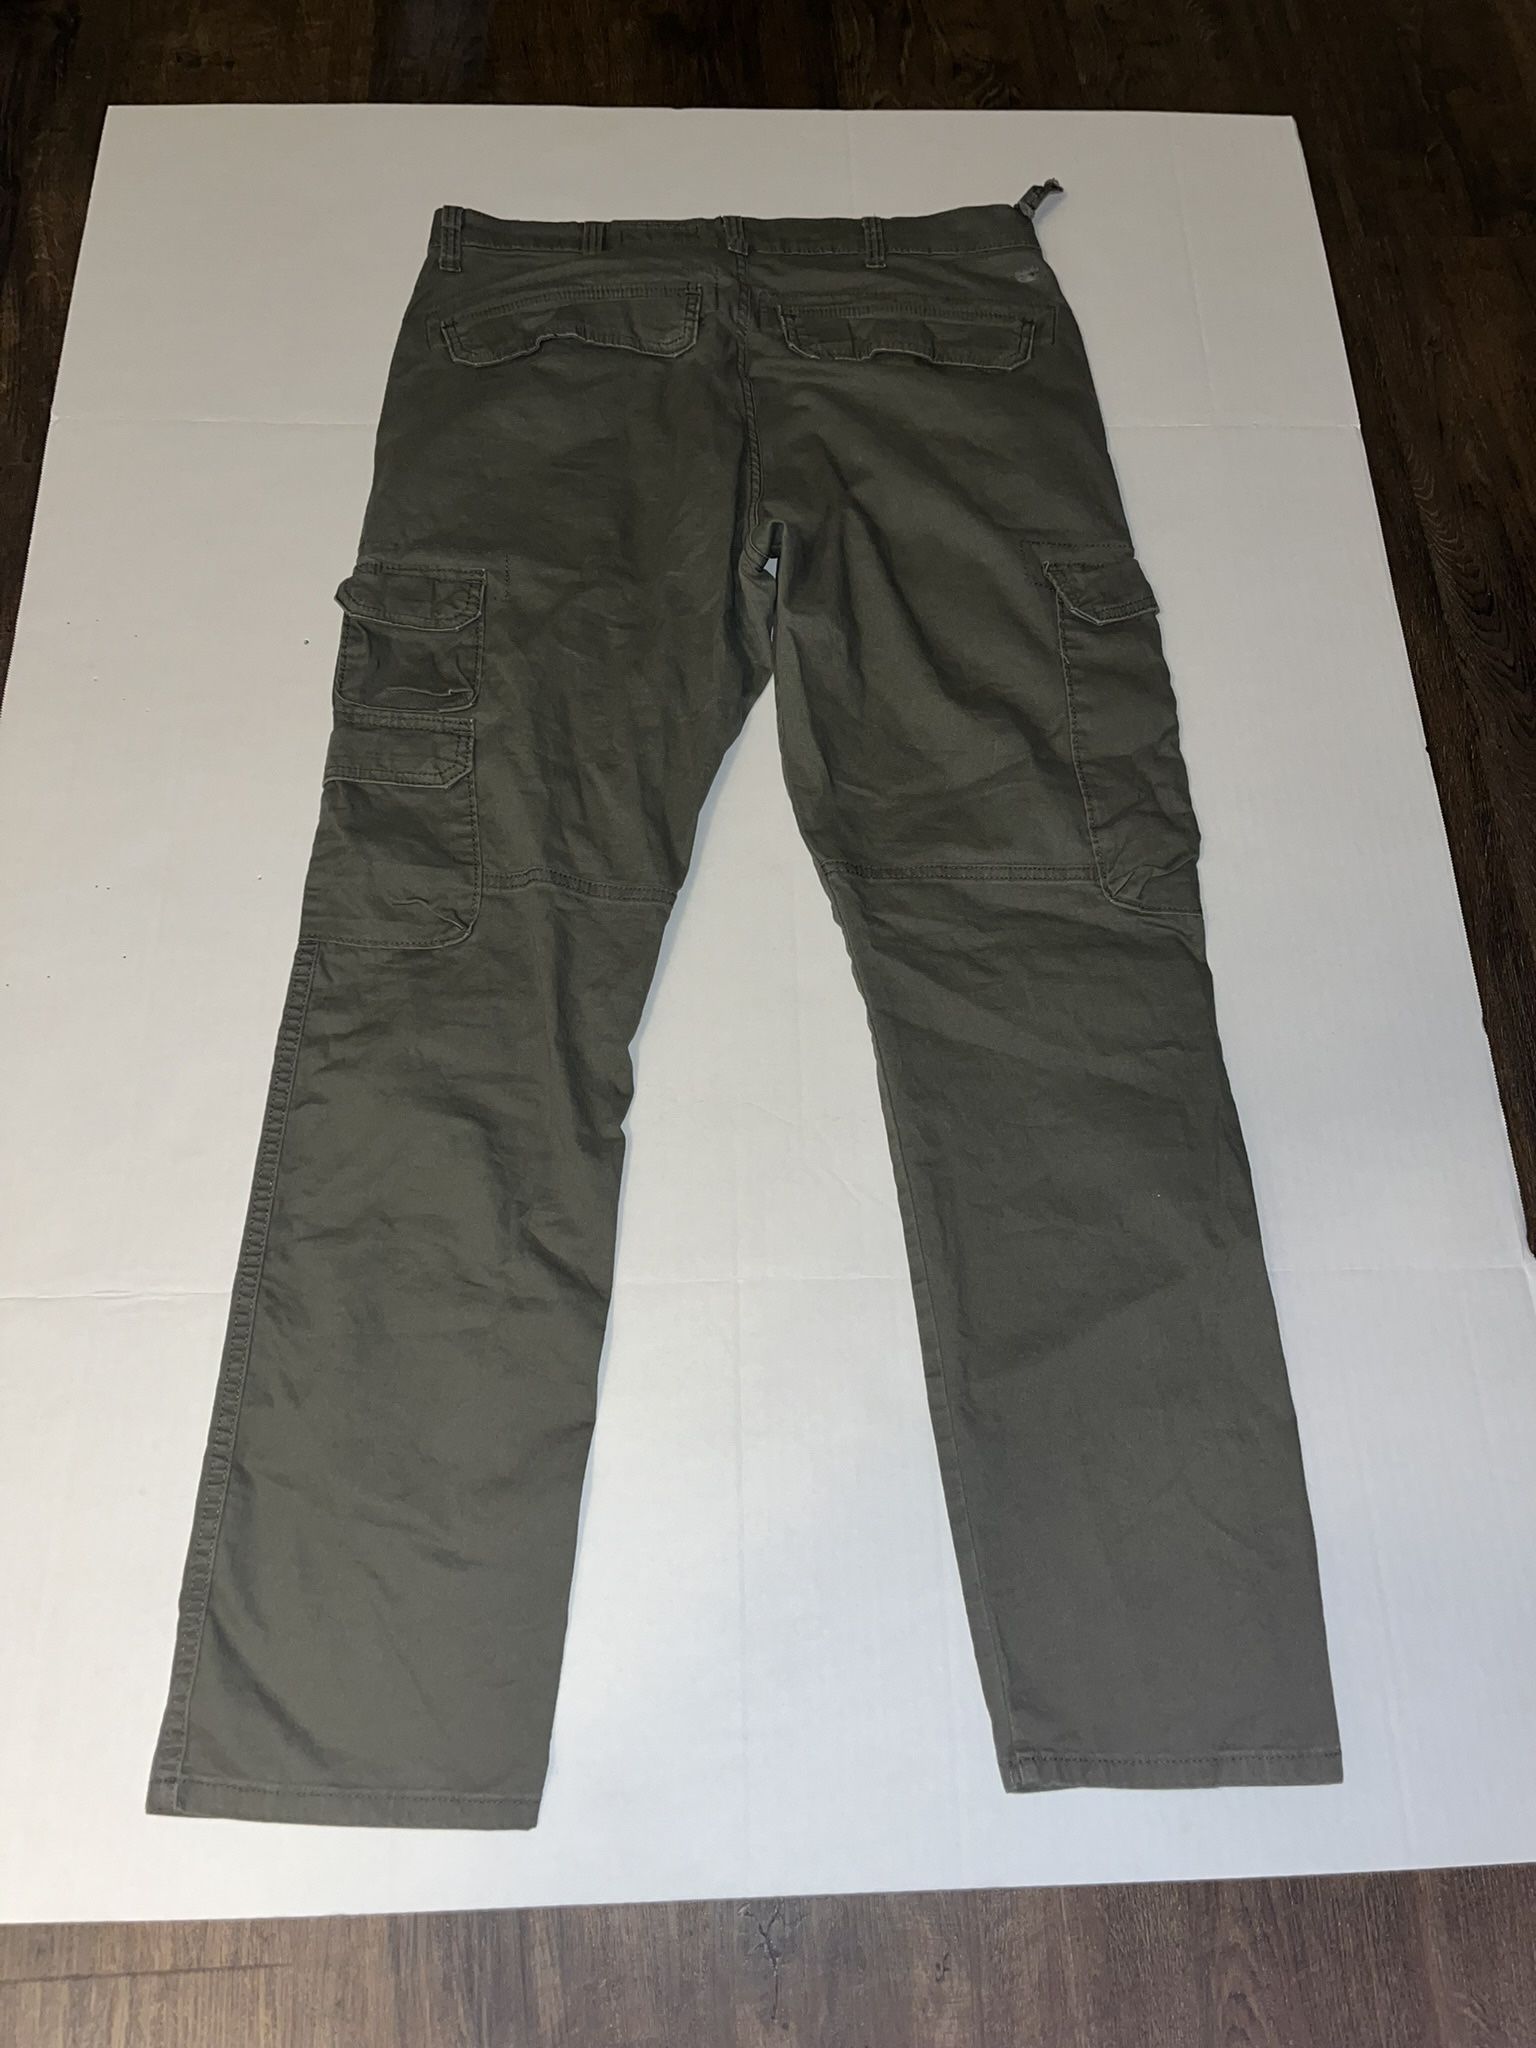 Men’s Olive Wrangler Cargo Pants - Size 34x32, Flaws Shown